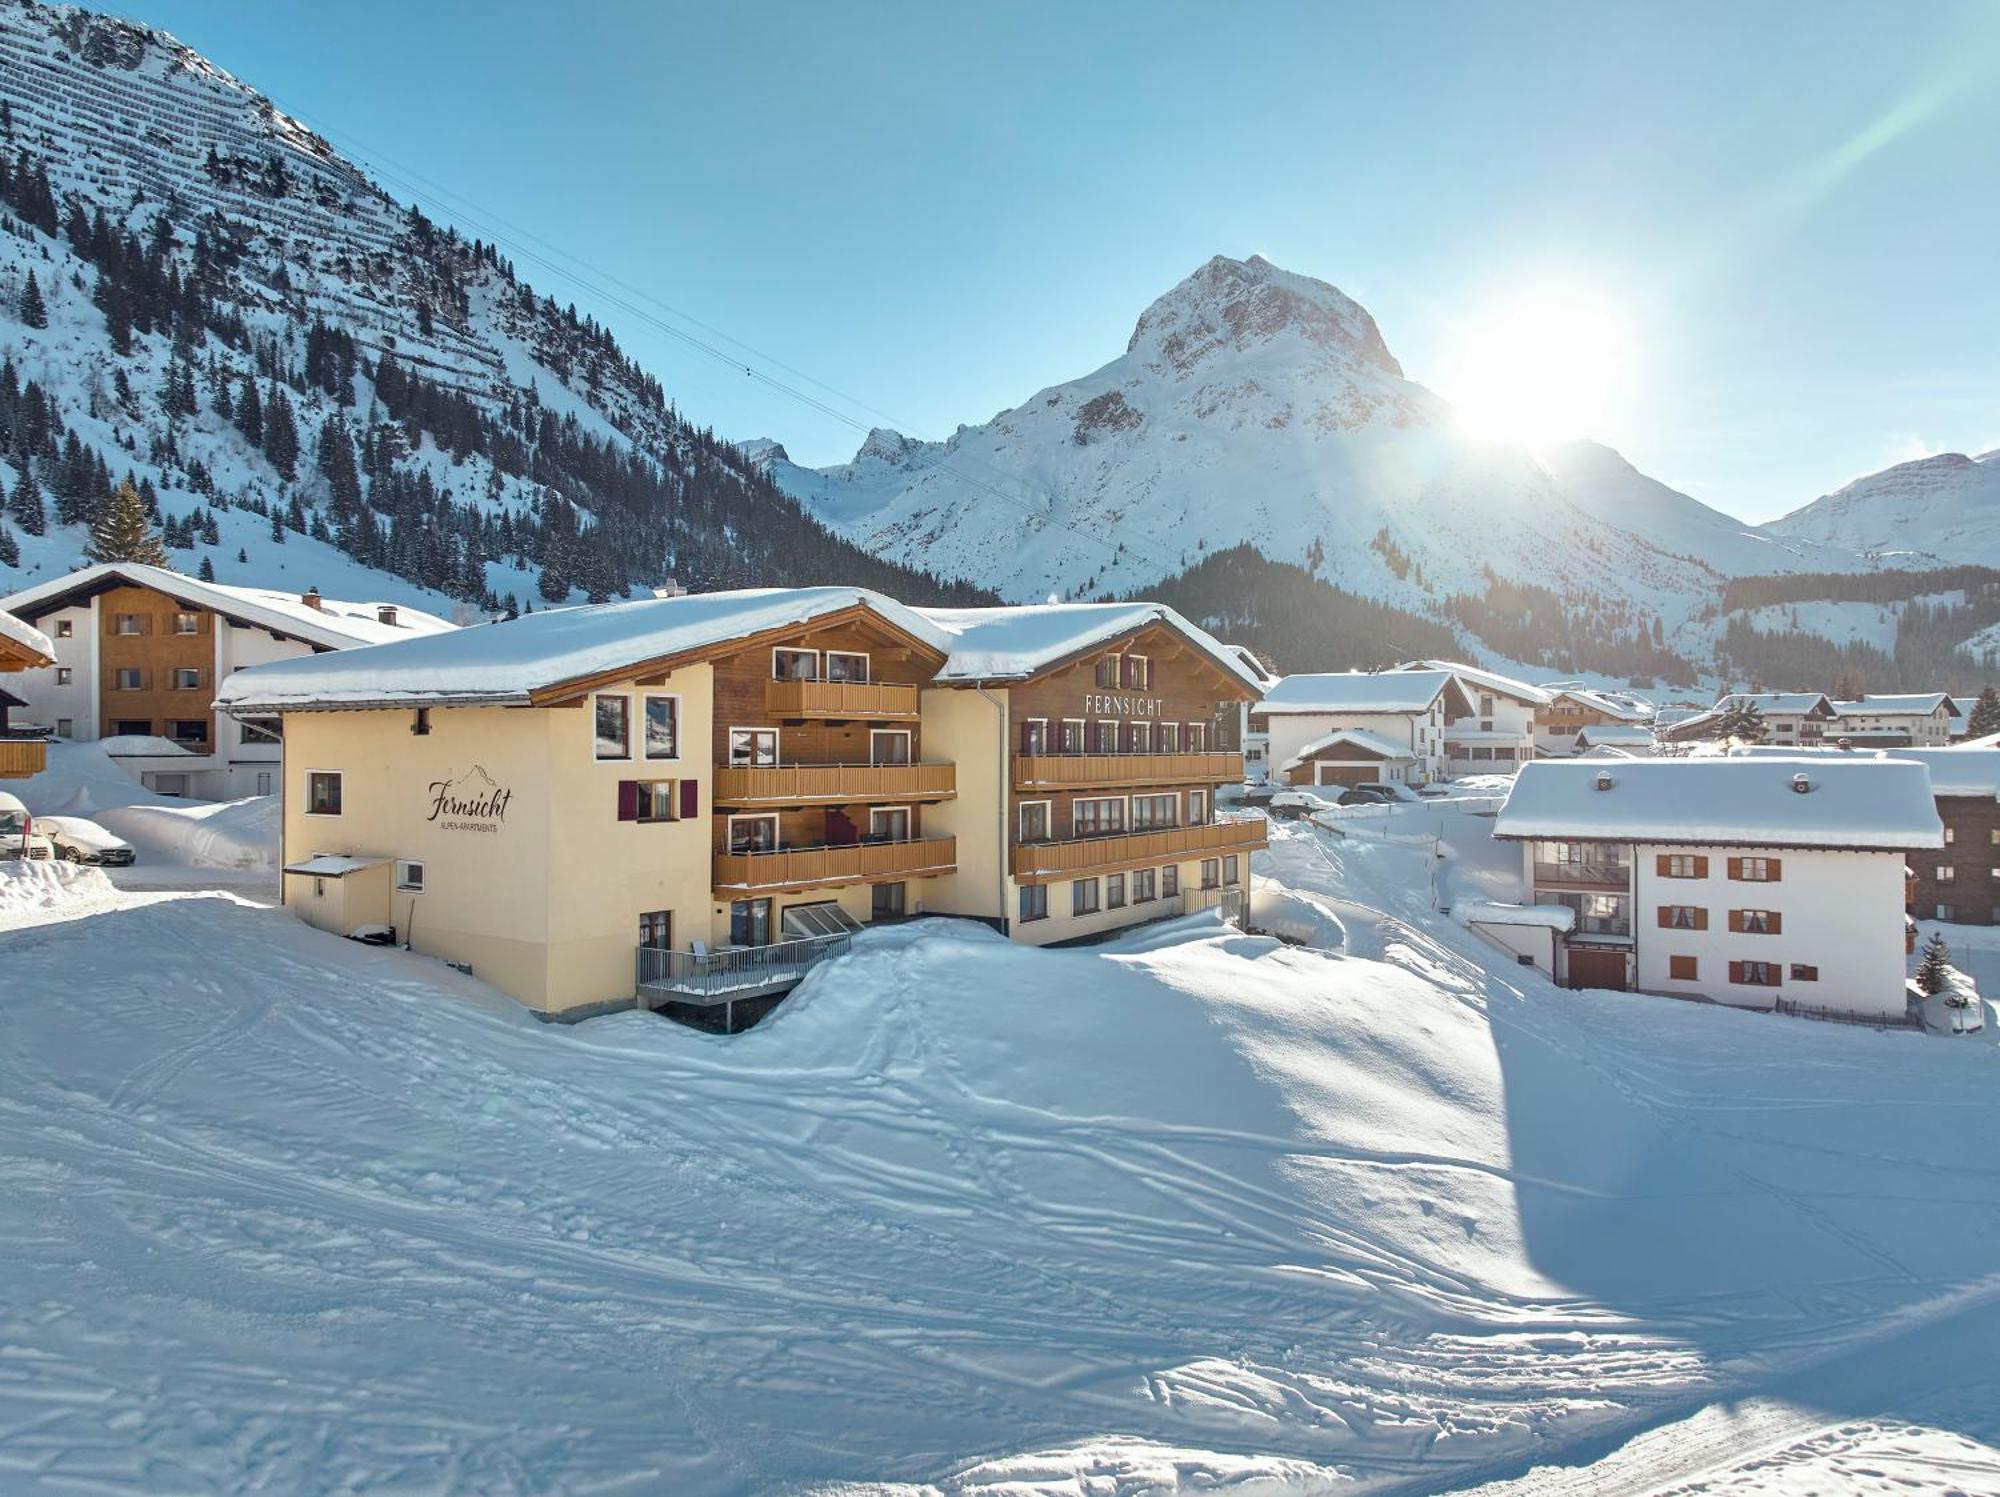 Fernsicht Alpen-Apartments Лех Экстерьер фото